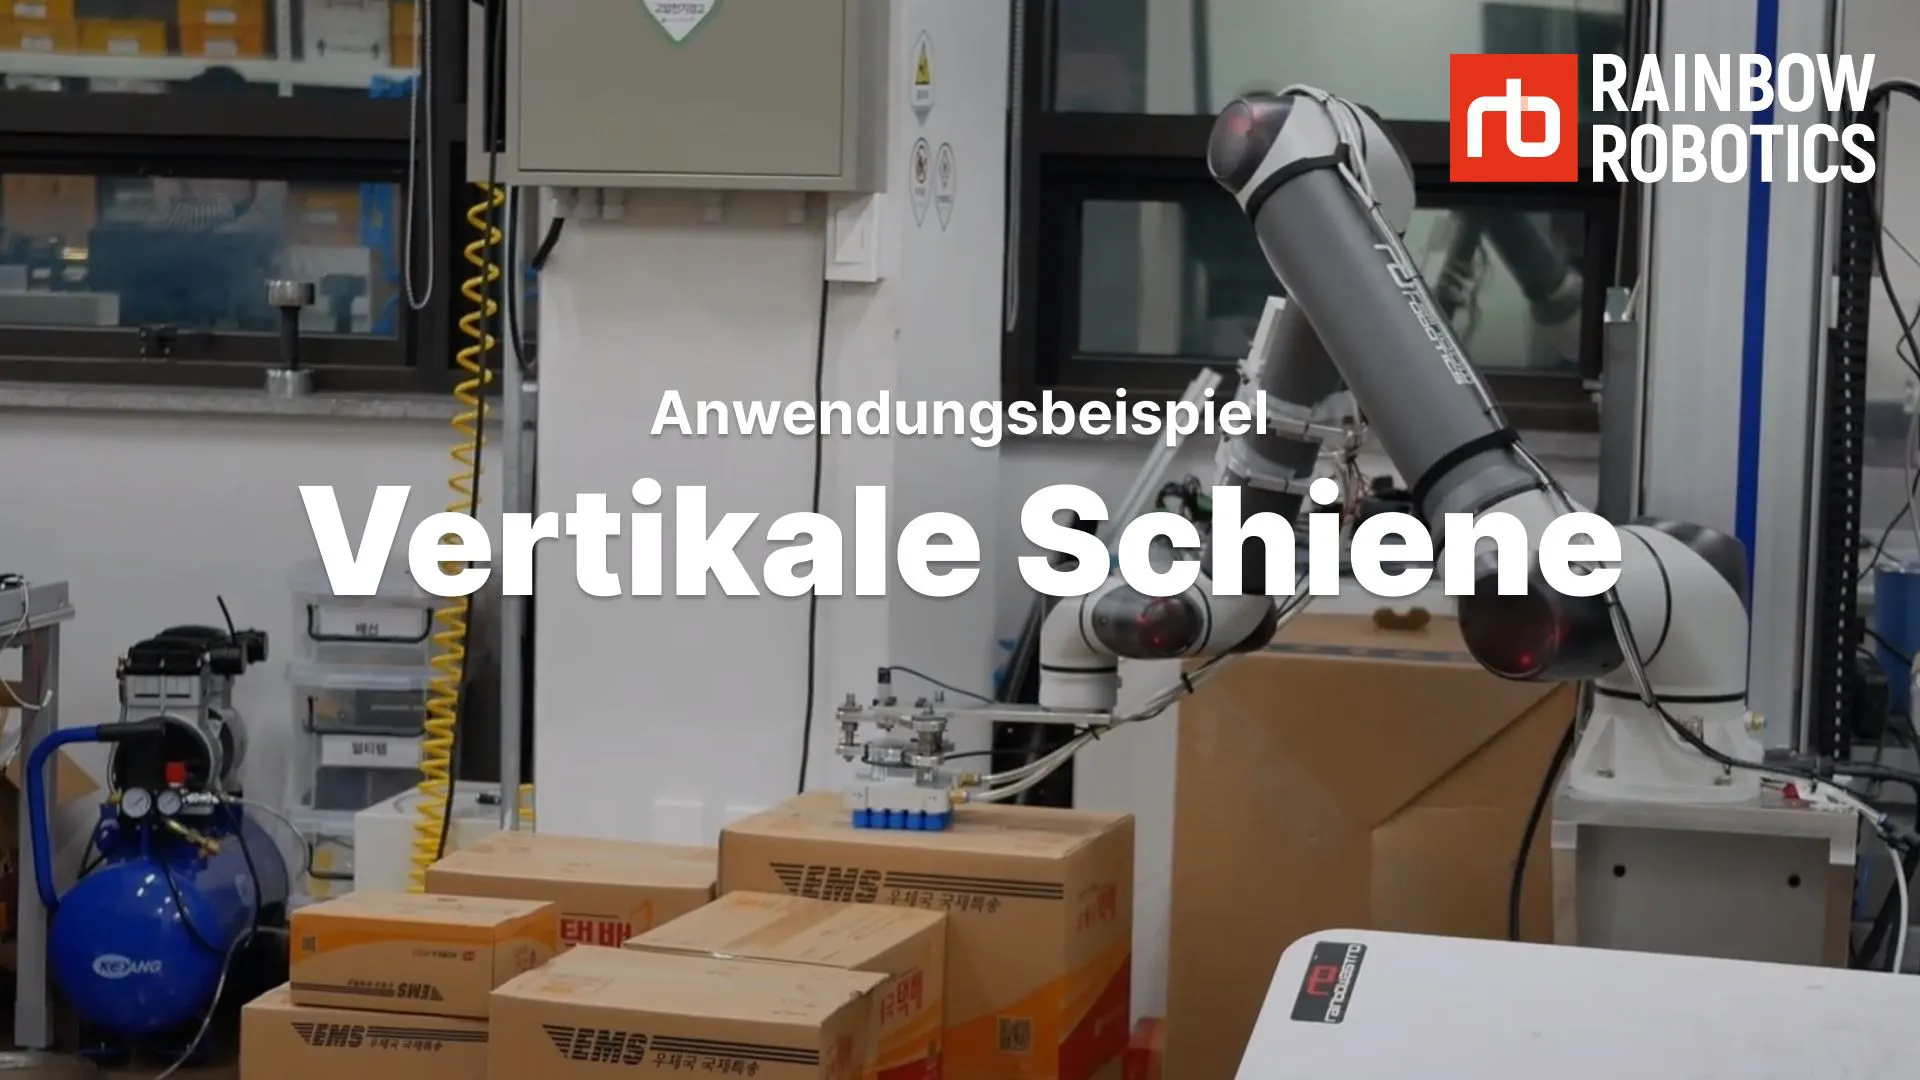 Thumbnail of Schleifen example application of Rainbow Robotics Cobots